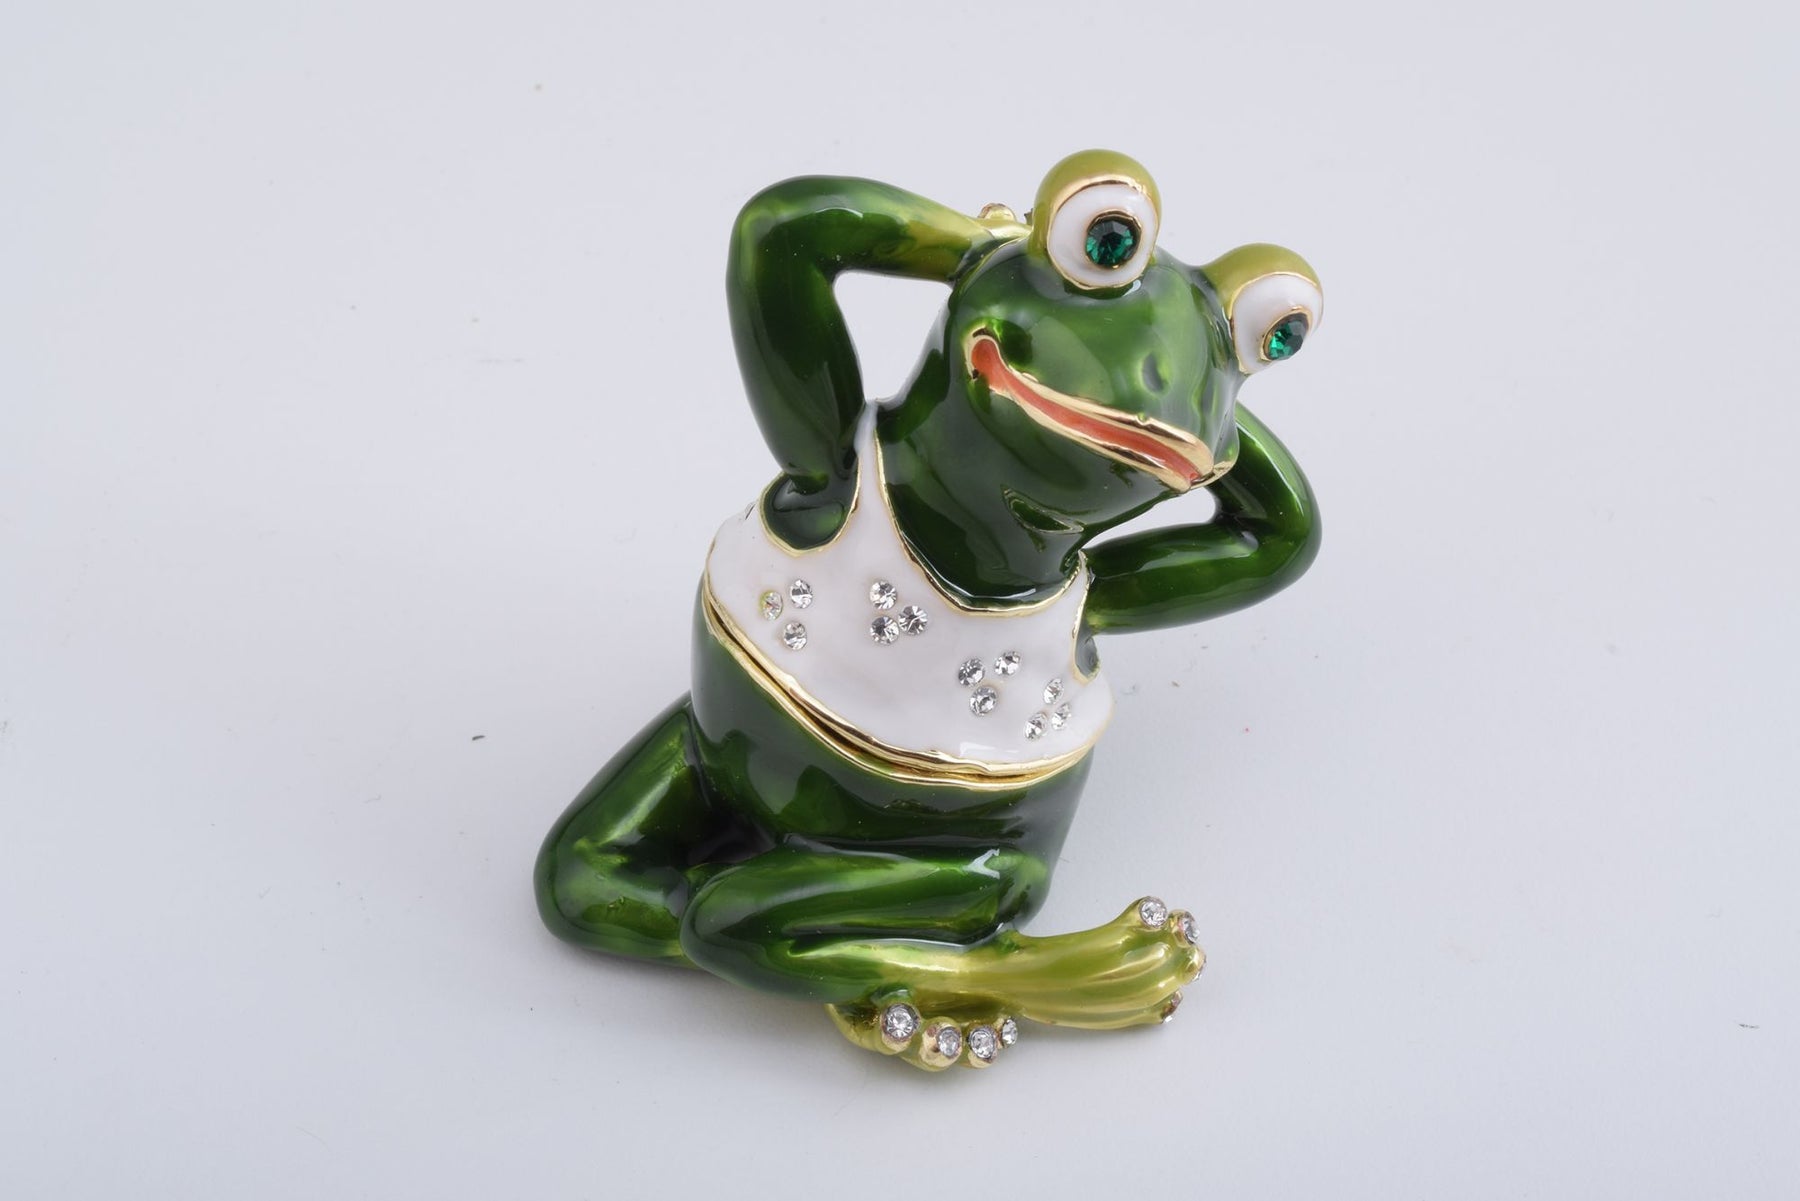 Keren Kopal Gymnastic Frog with a White Shirt  62.62